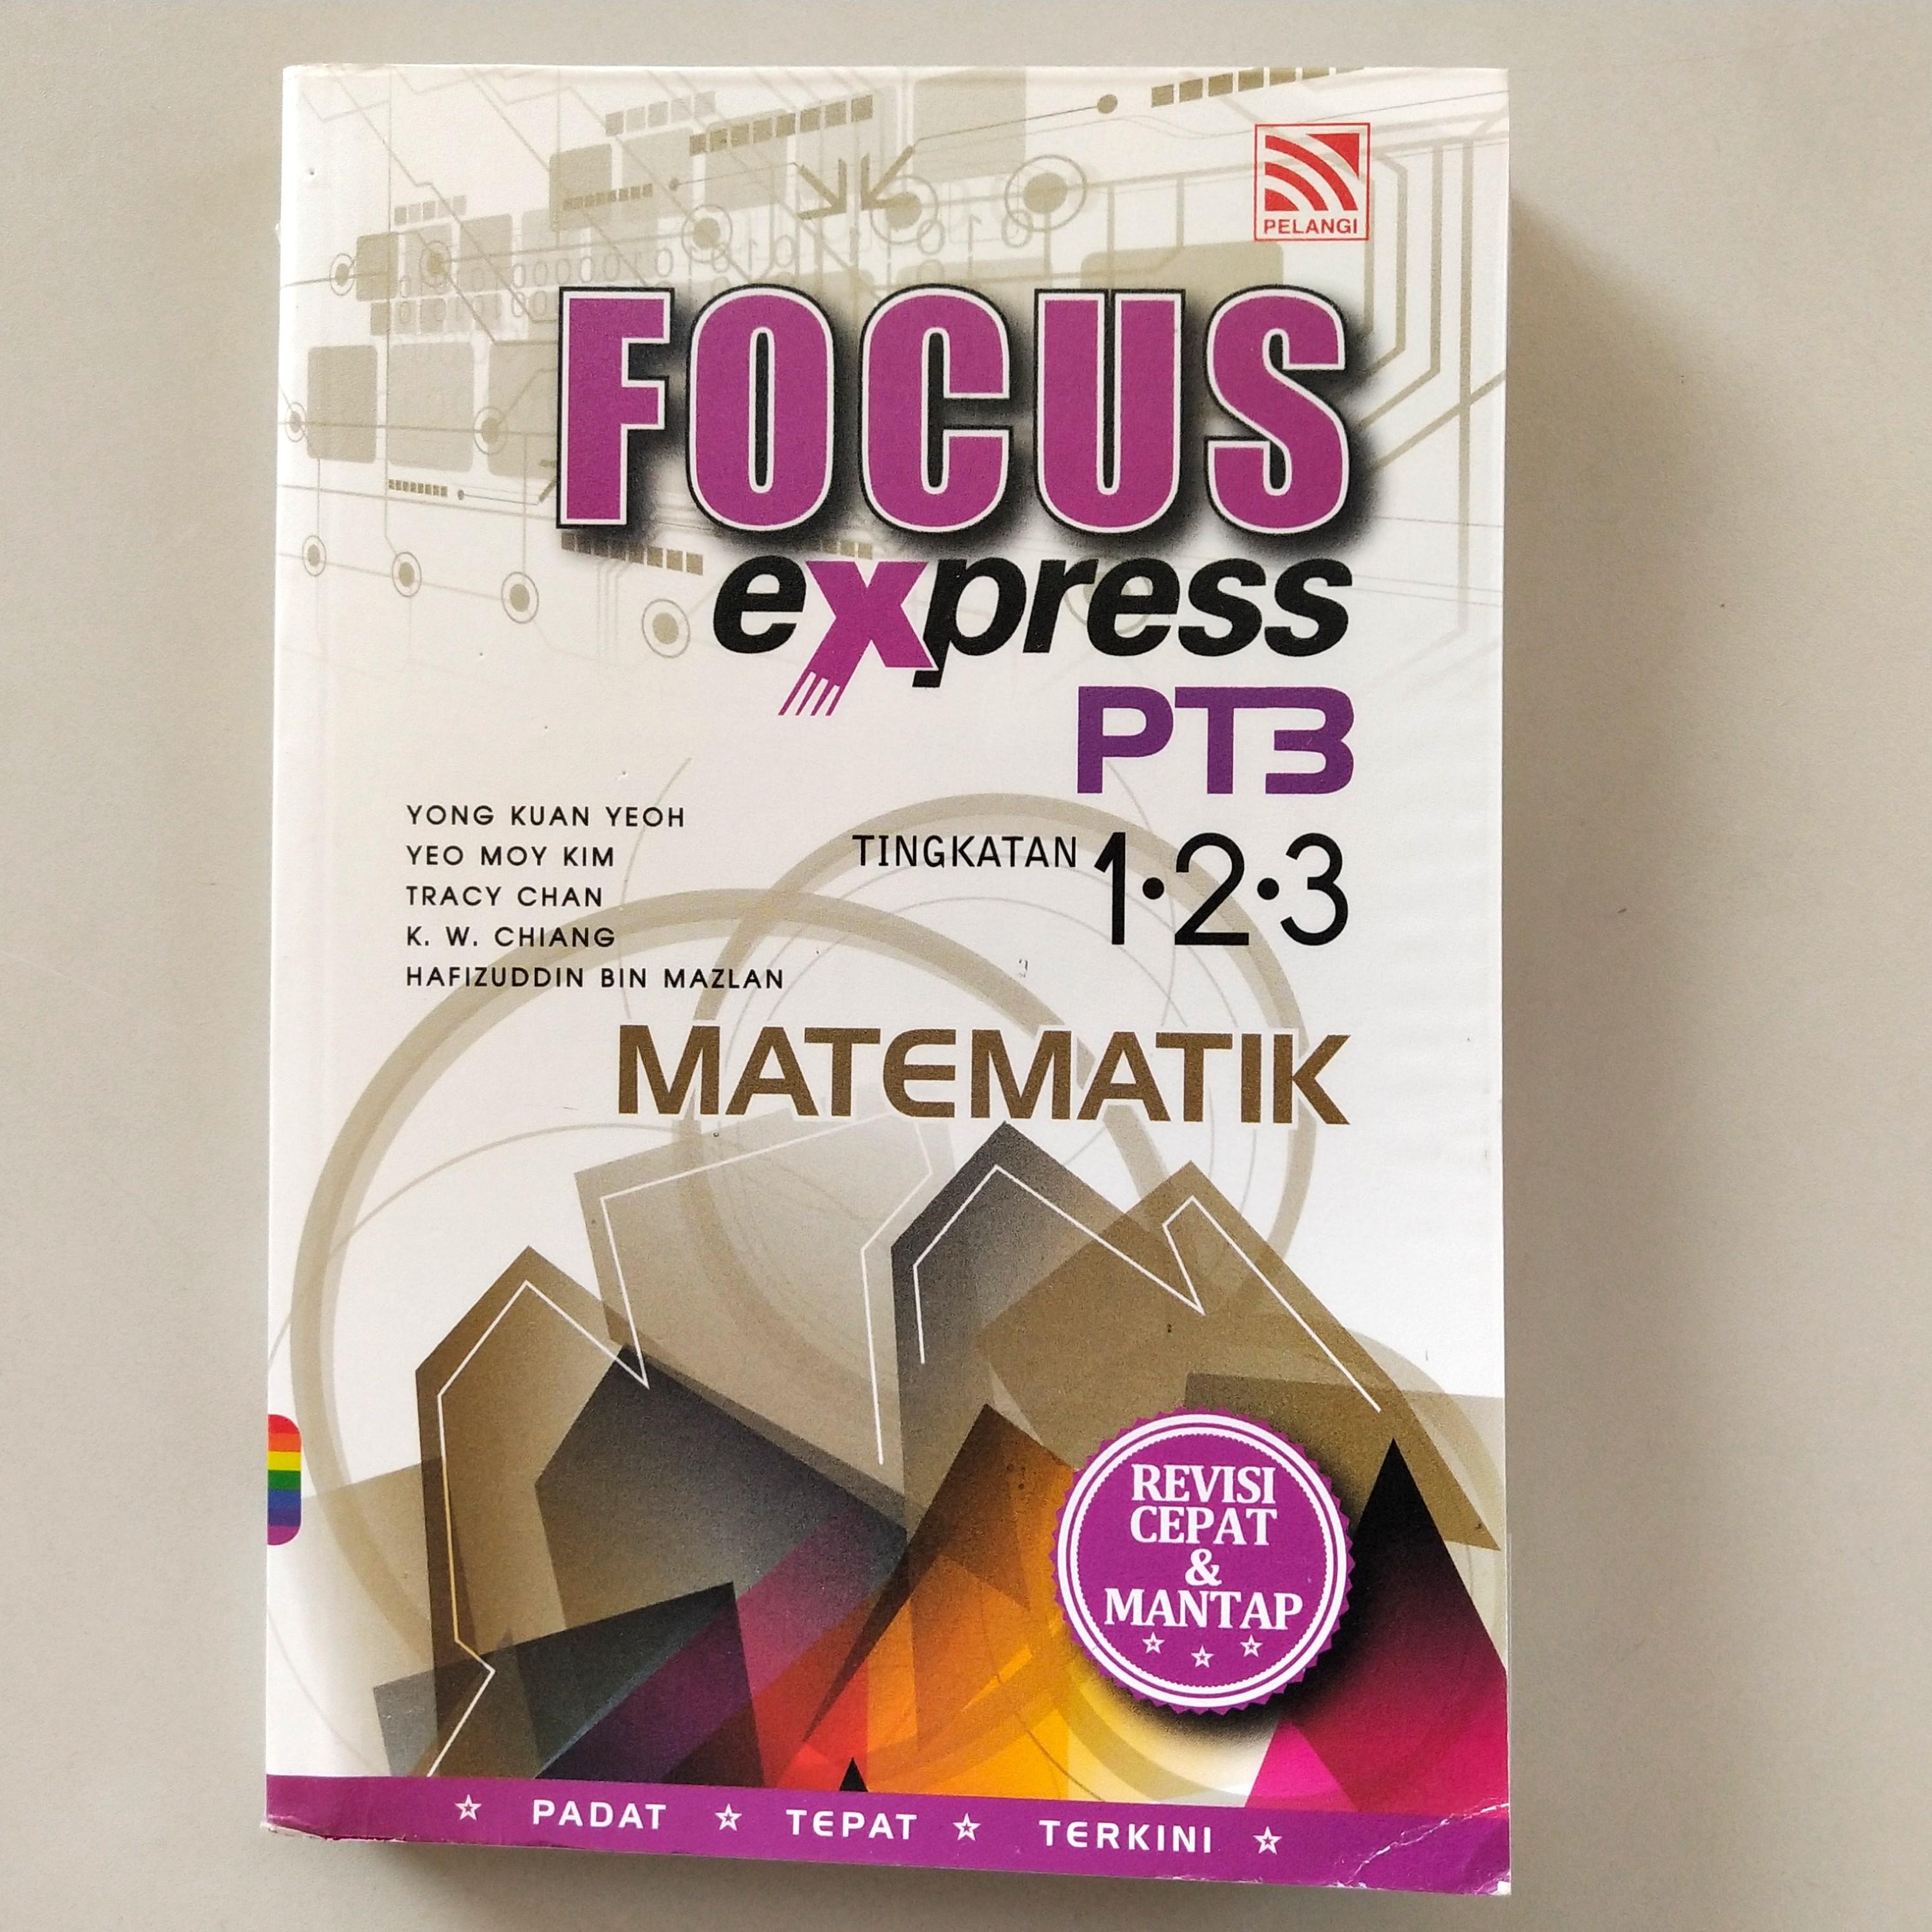 Focus Express Pt3 Form Tingkatan 1 2 3 Matematik Mathematics Hobbies Toys Books Magazines Textbooks On Carousell